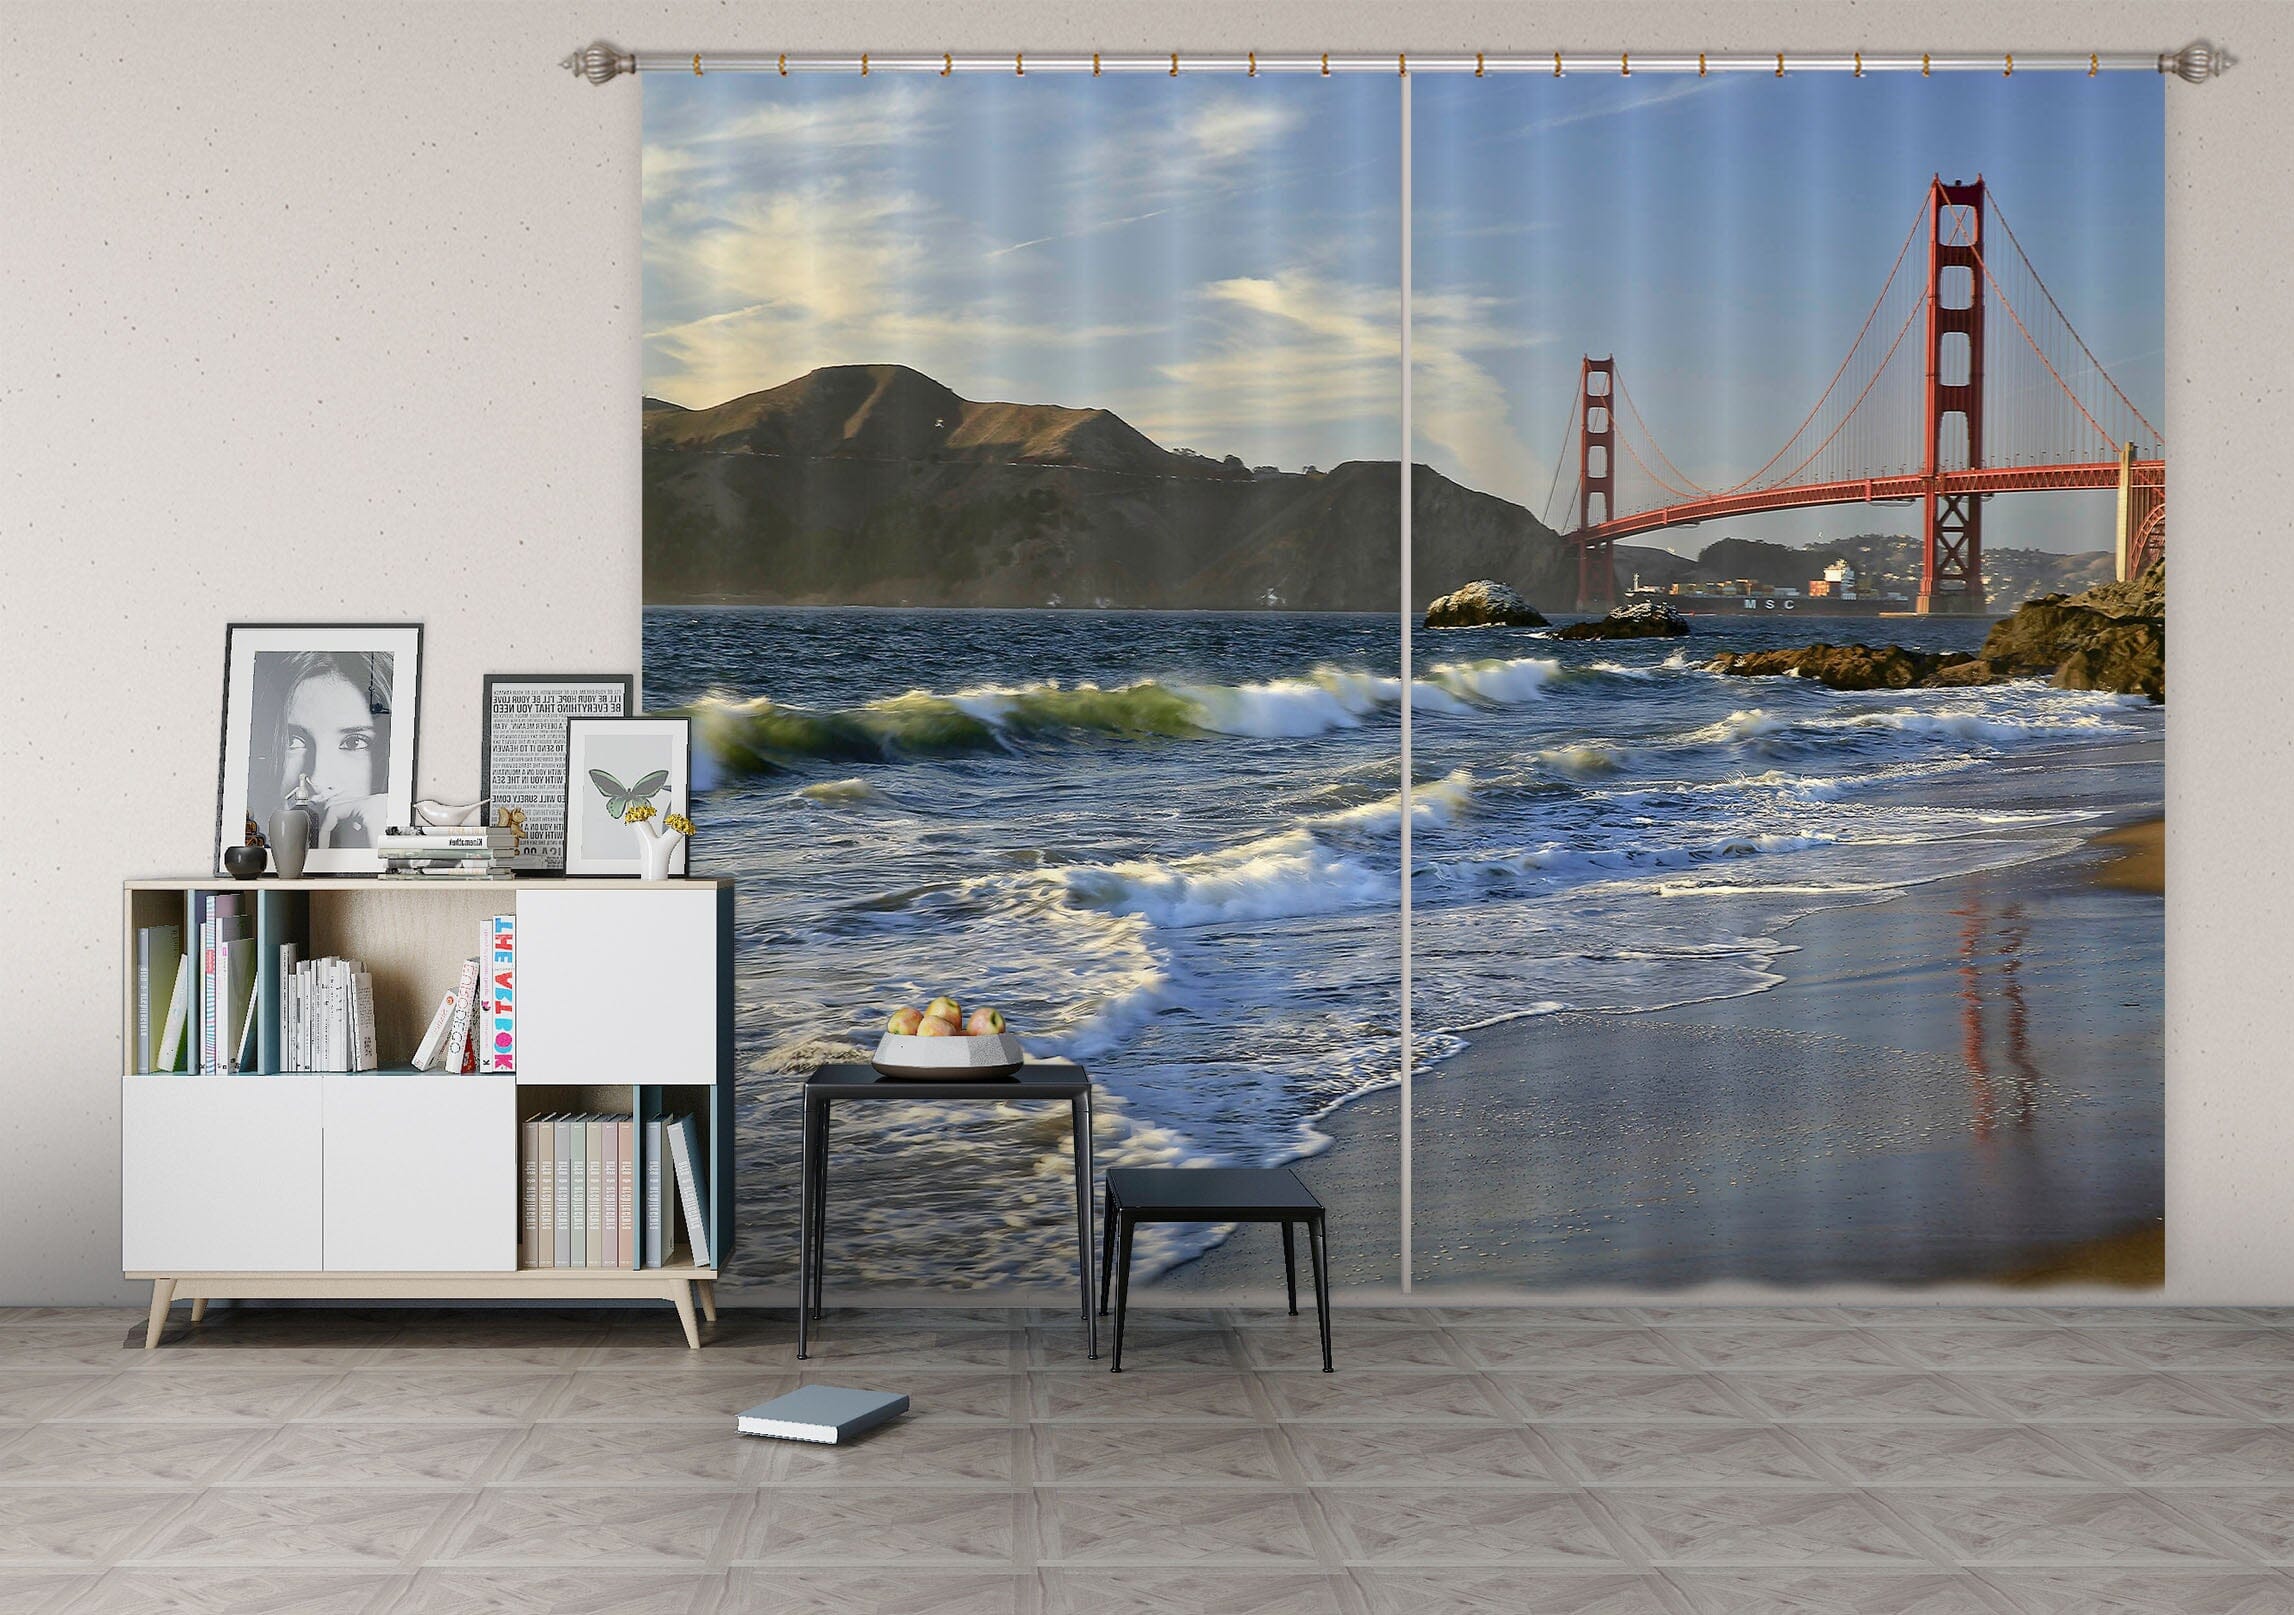 3D Wave Beach 050 Kathy Barefield Curtain Curtains Drapes Curtains AJ Creativity Home 